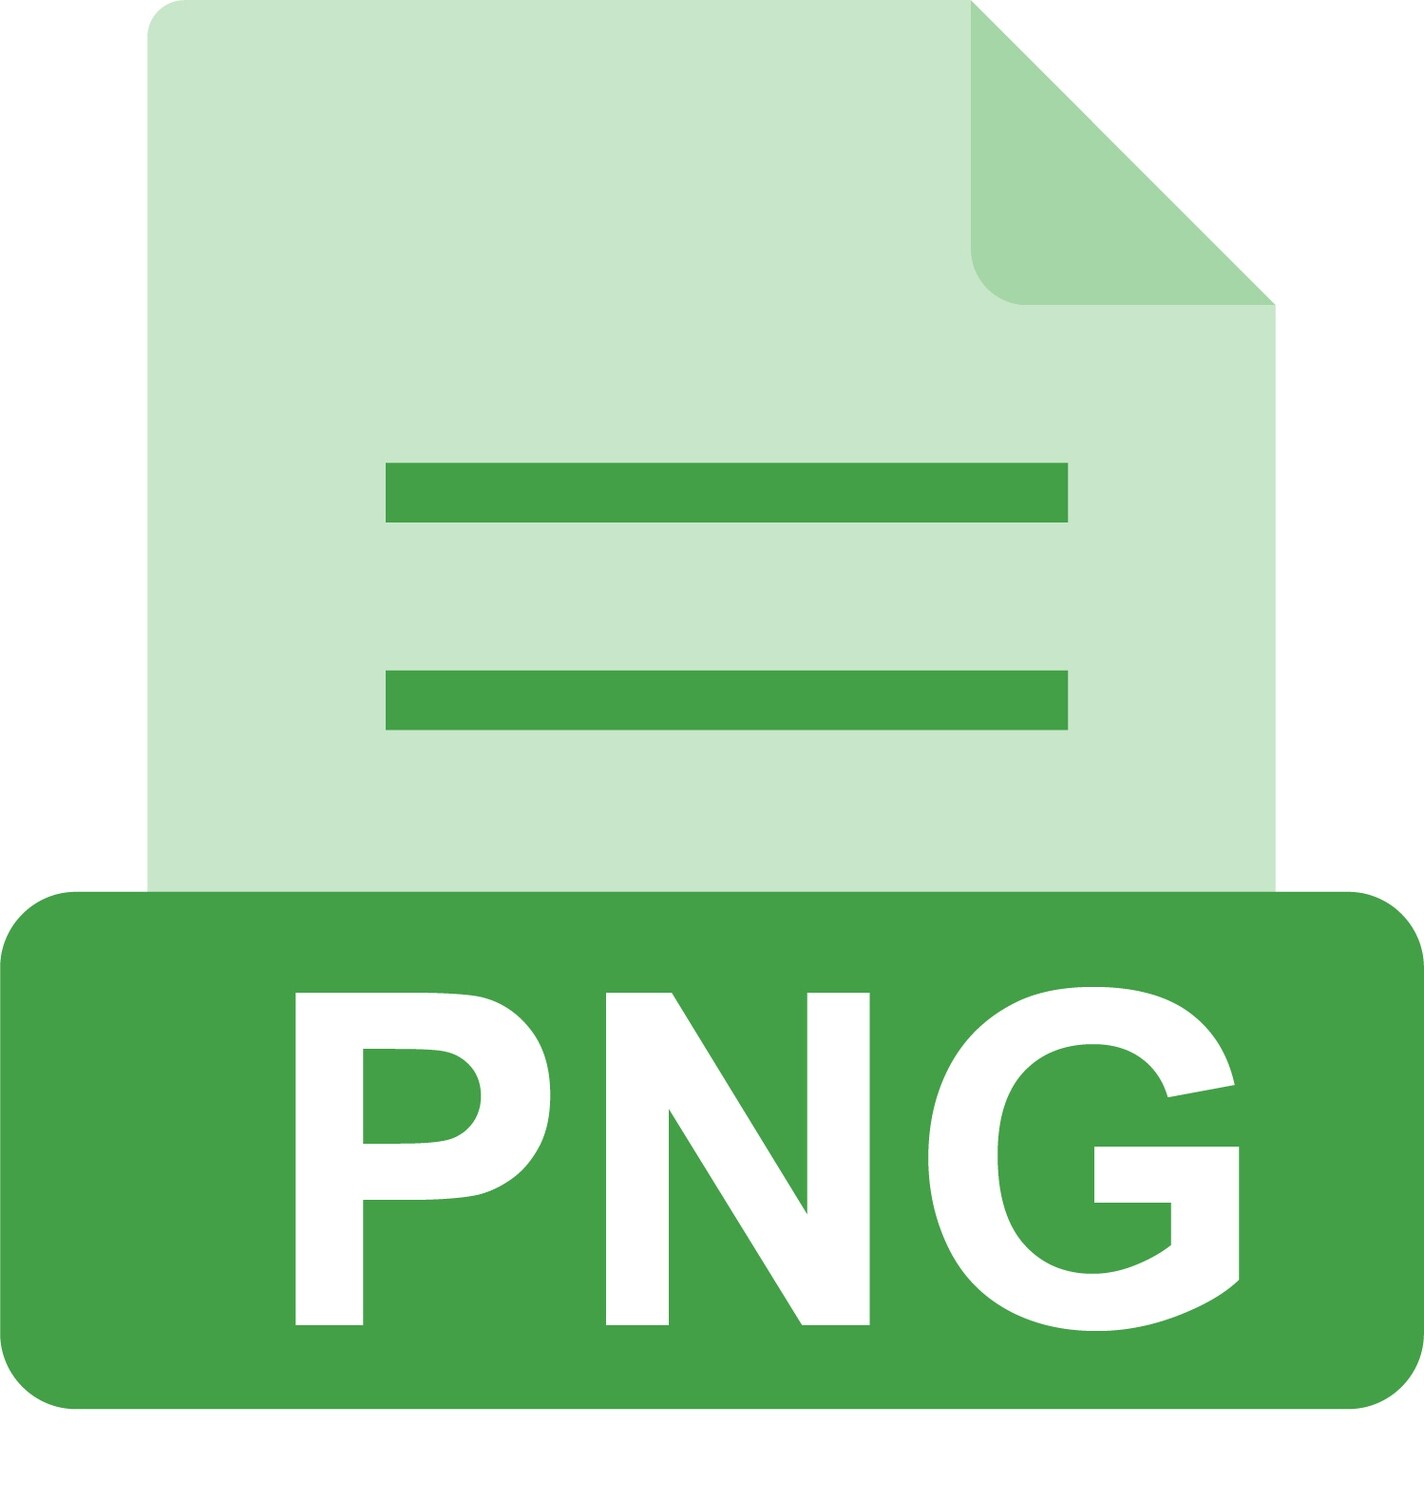 E-File: PNG, Geologist Washington